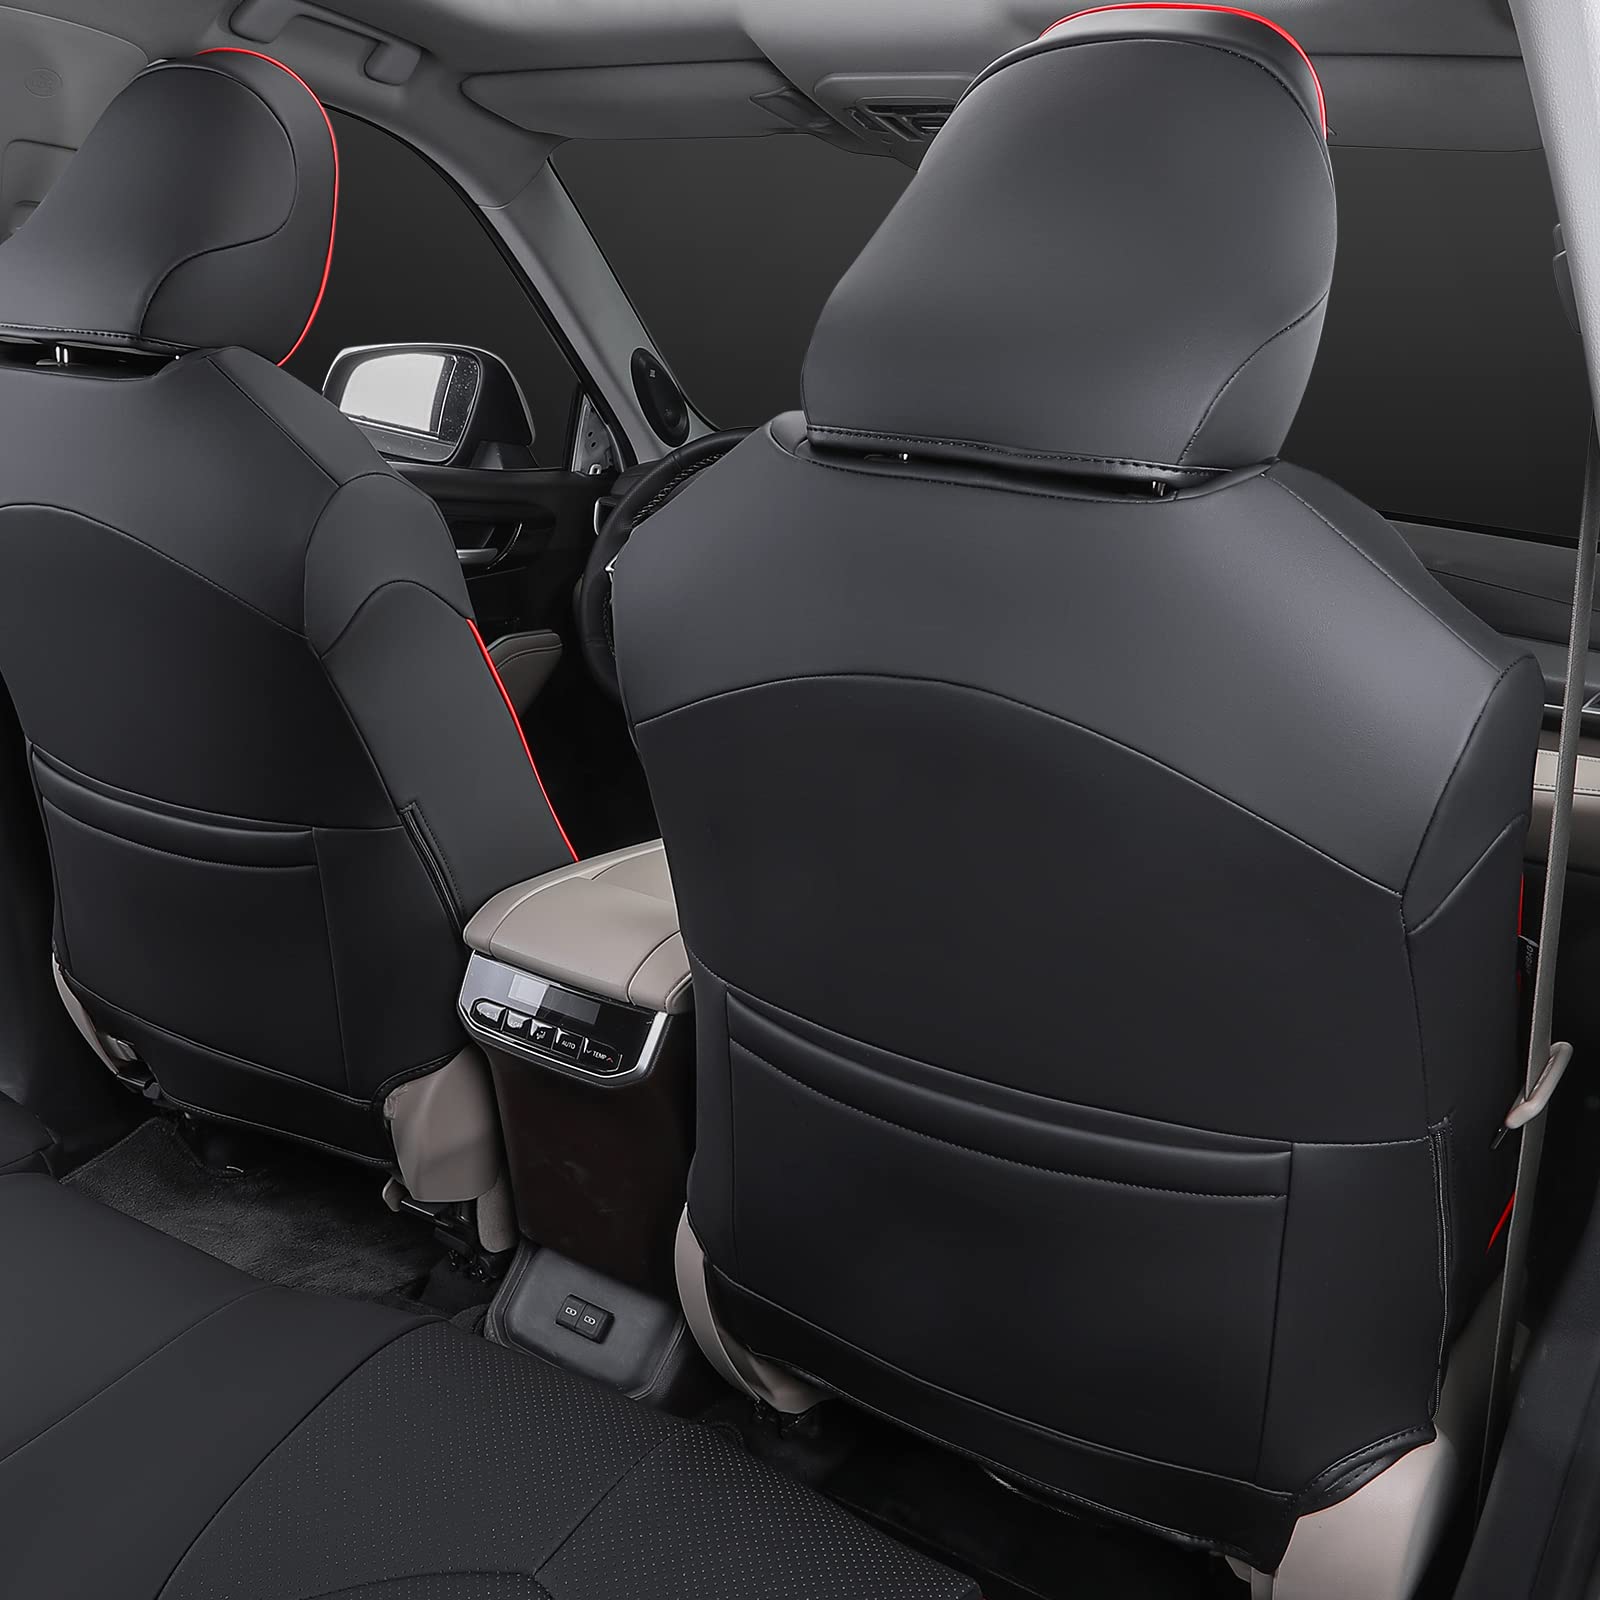 Xipoo Fit 2020-2023 Toyota Highlander 8 Seats Car Seat Cover 3 Row Car Seat Protector for Toyota Highlander 2020 2021 2022 2023 Accessories (Fit 2020-2023 W/Second Row 40/60 Split, S Black+R